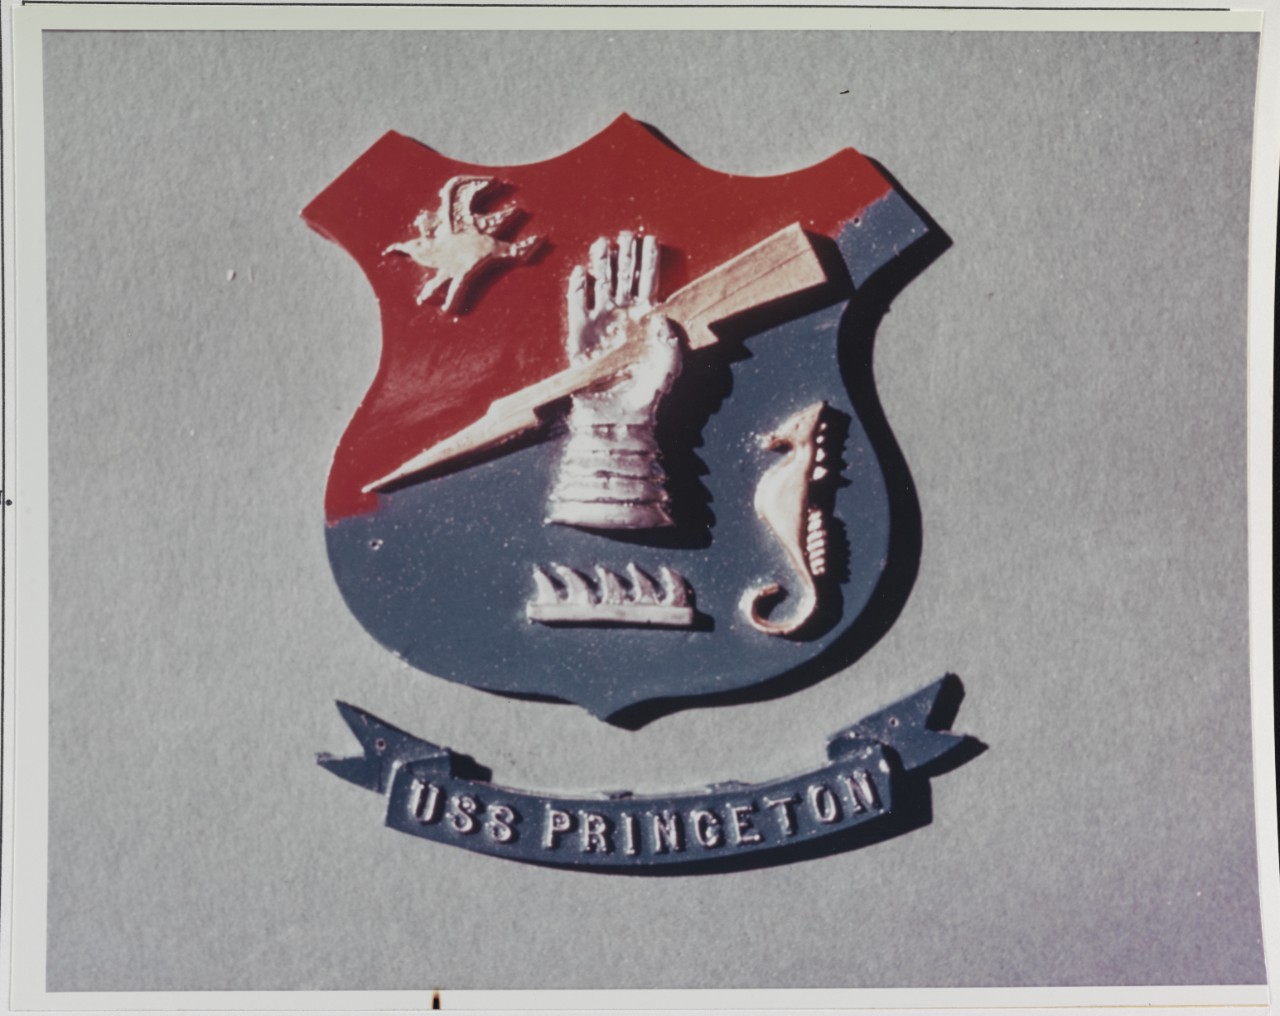 Insignia:  USS PRINCETON (LPH-5)